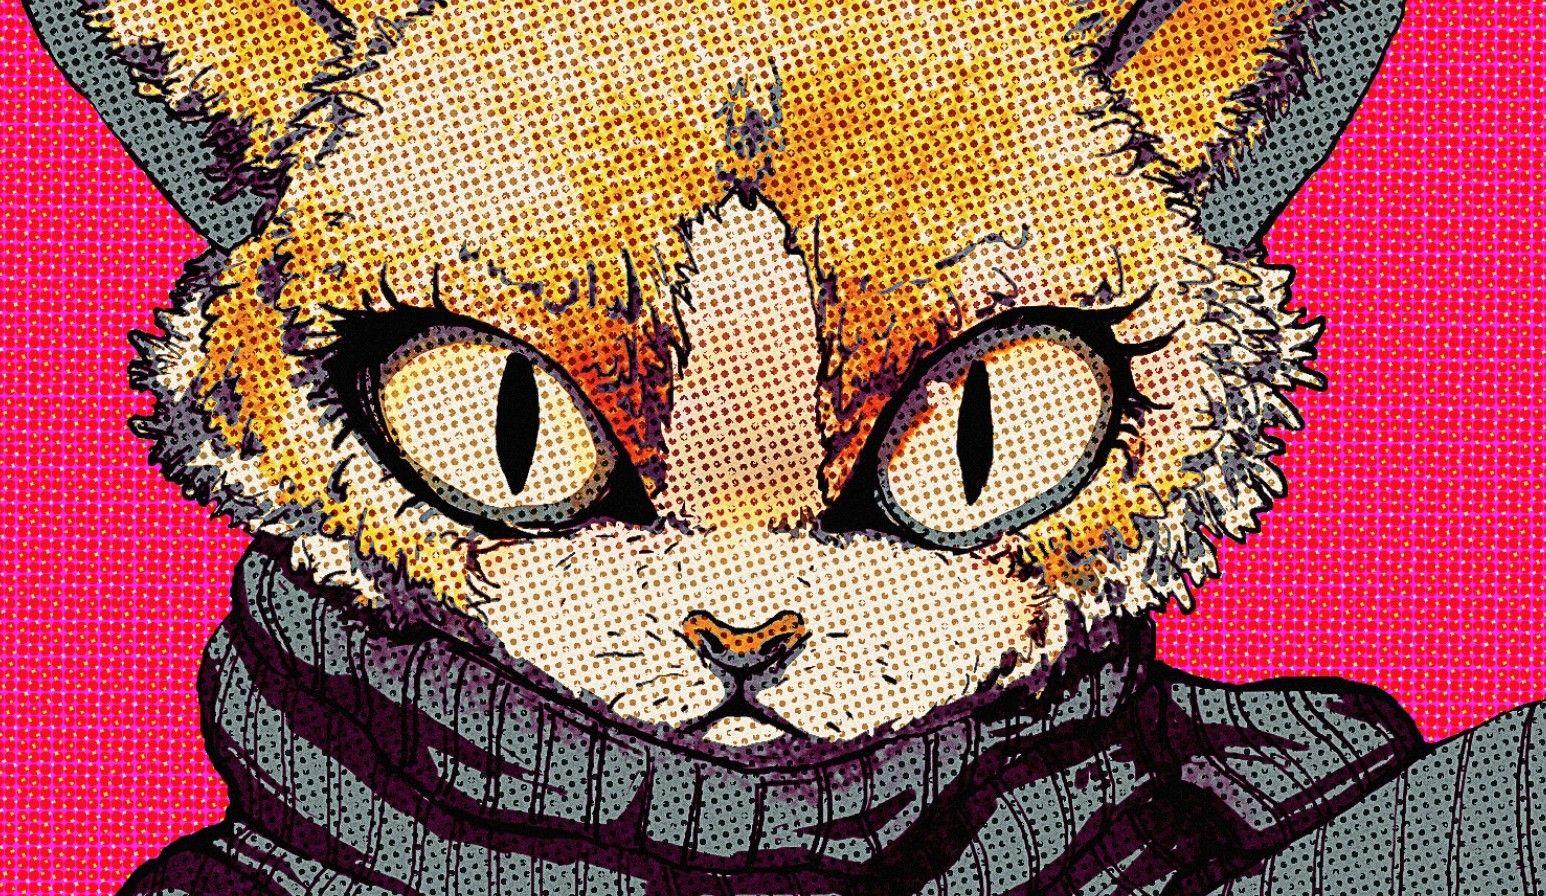 تصویر استوک هنری از شخصیت کارتونی گربه معروف مناسب چاپ تابلو فرش 